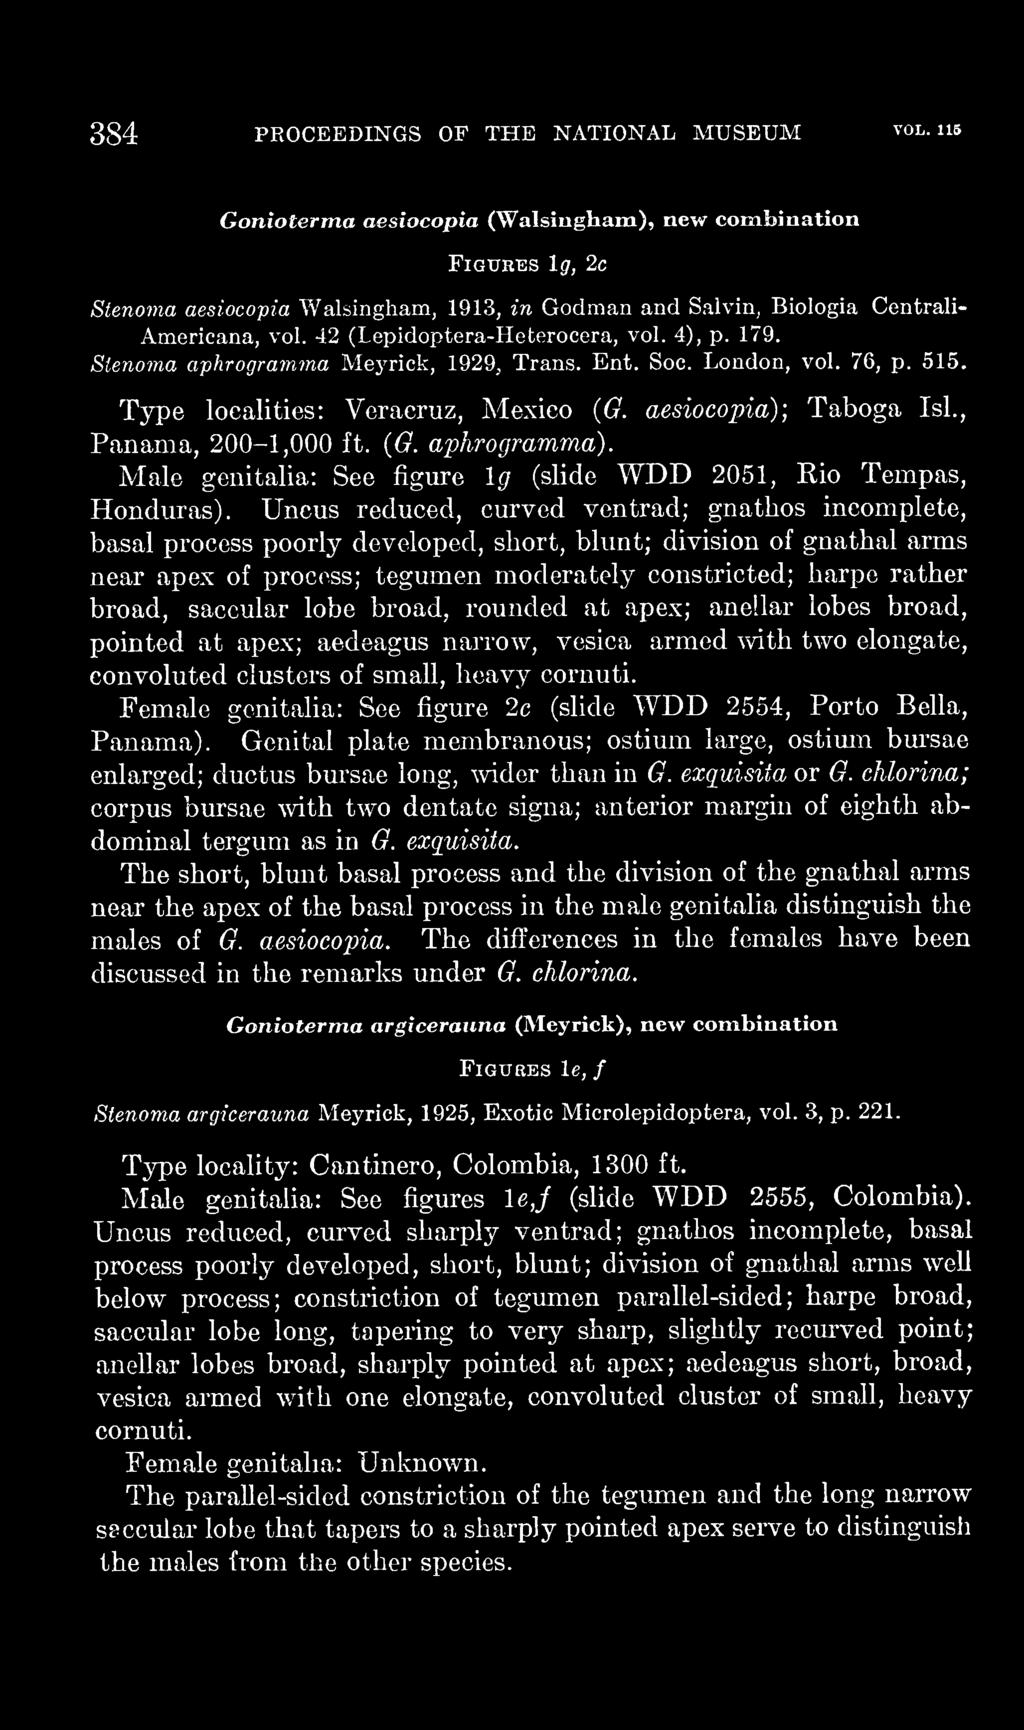 4), p. 179. Sienoma aphrogramma Mej-rick, 1929, Trans. Ent. Soc. London, vol. 76, p. 515. Type localities: Veracruz, Mexico {G. aesiocopia)', Taboga Isl., Panama, 200-1,000 ft. (6^. aphrogramma).